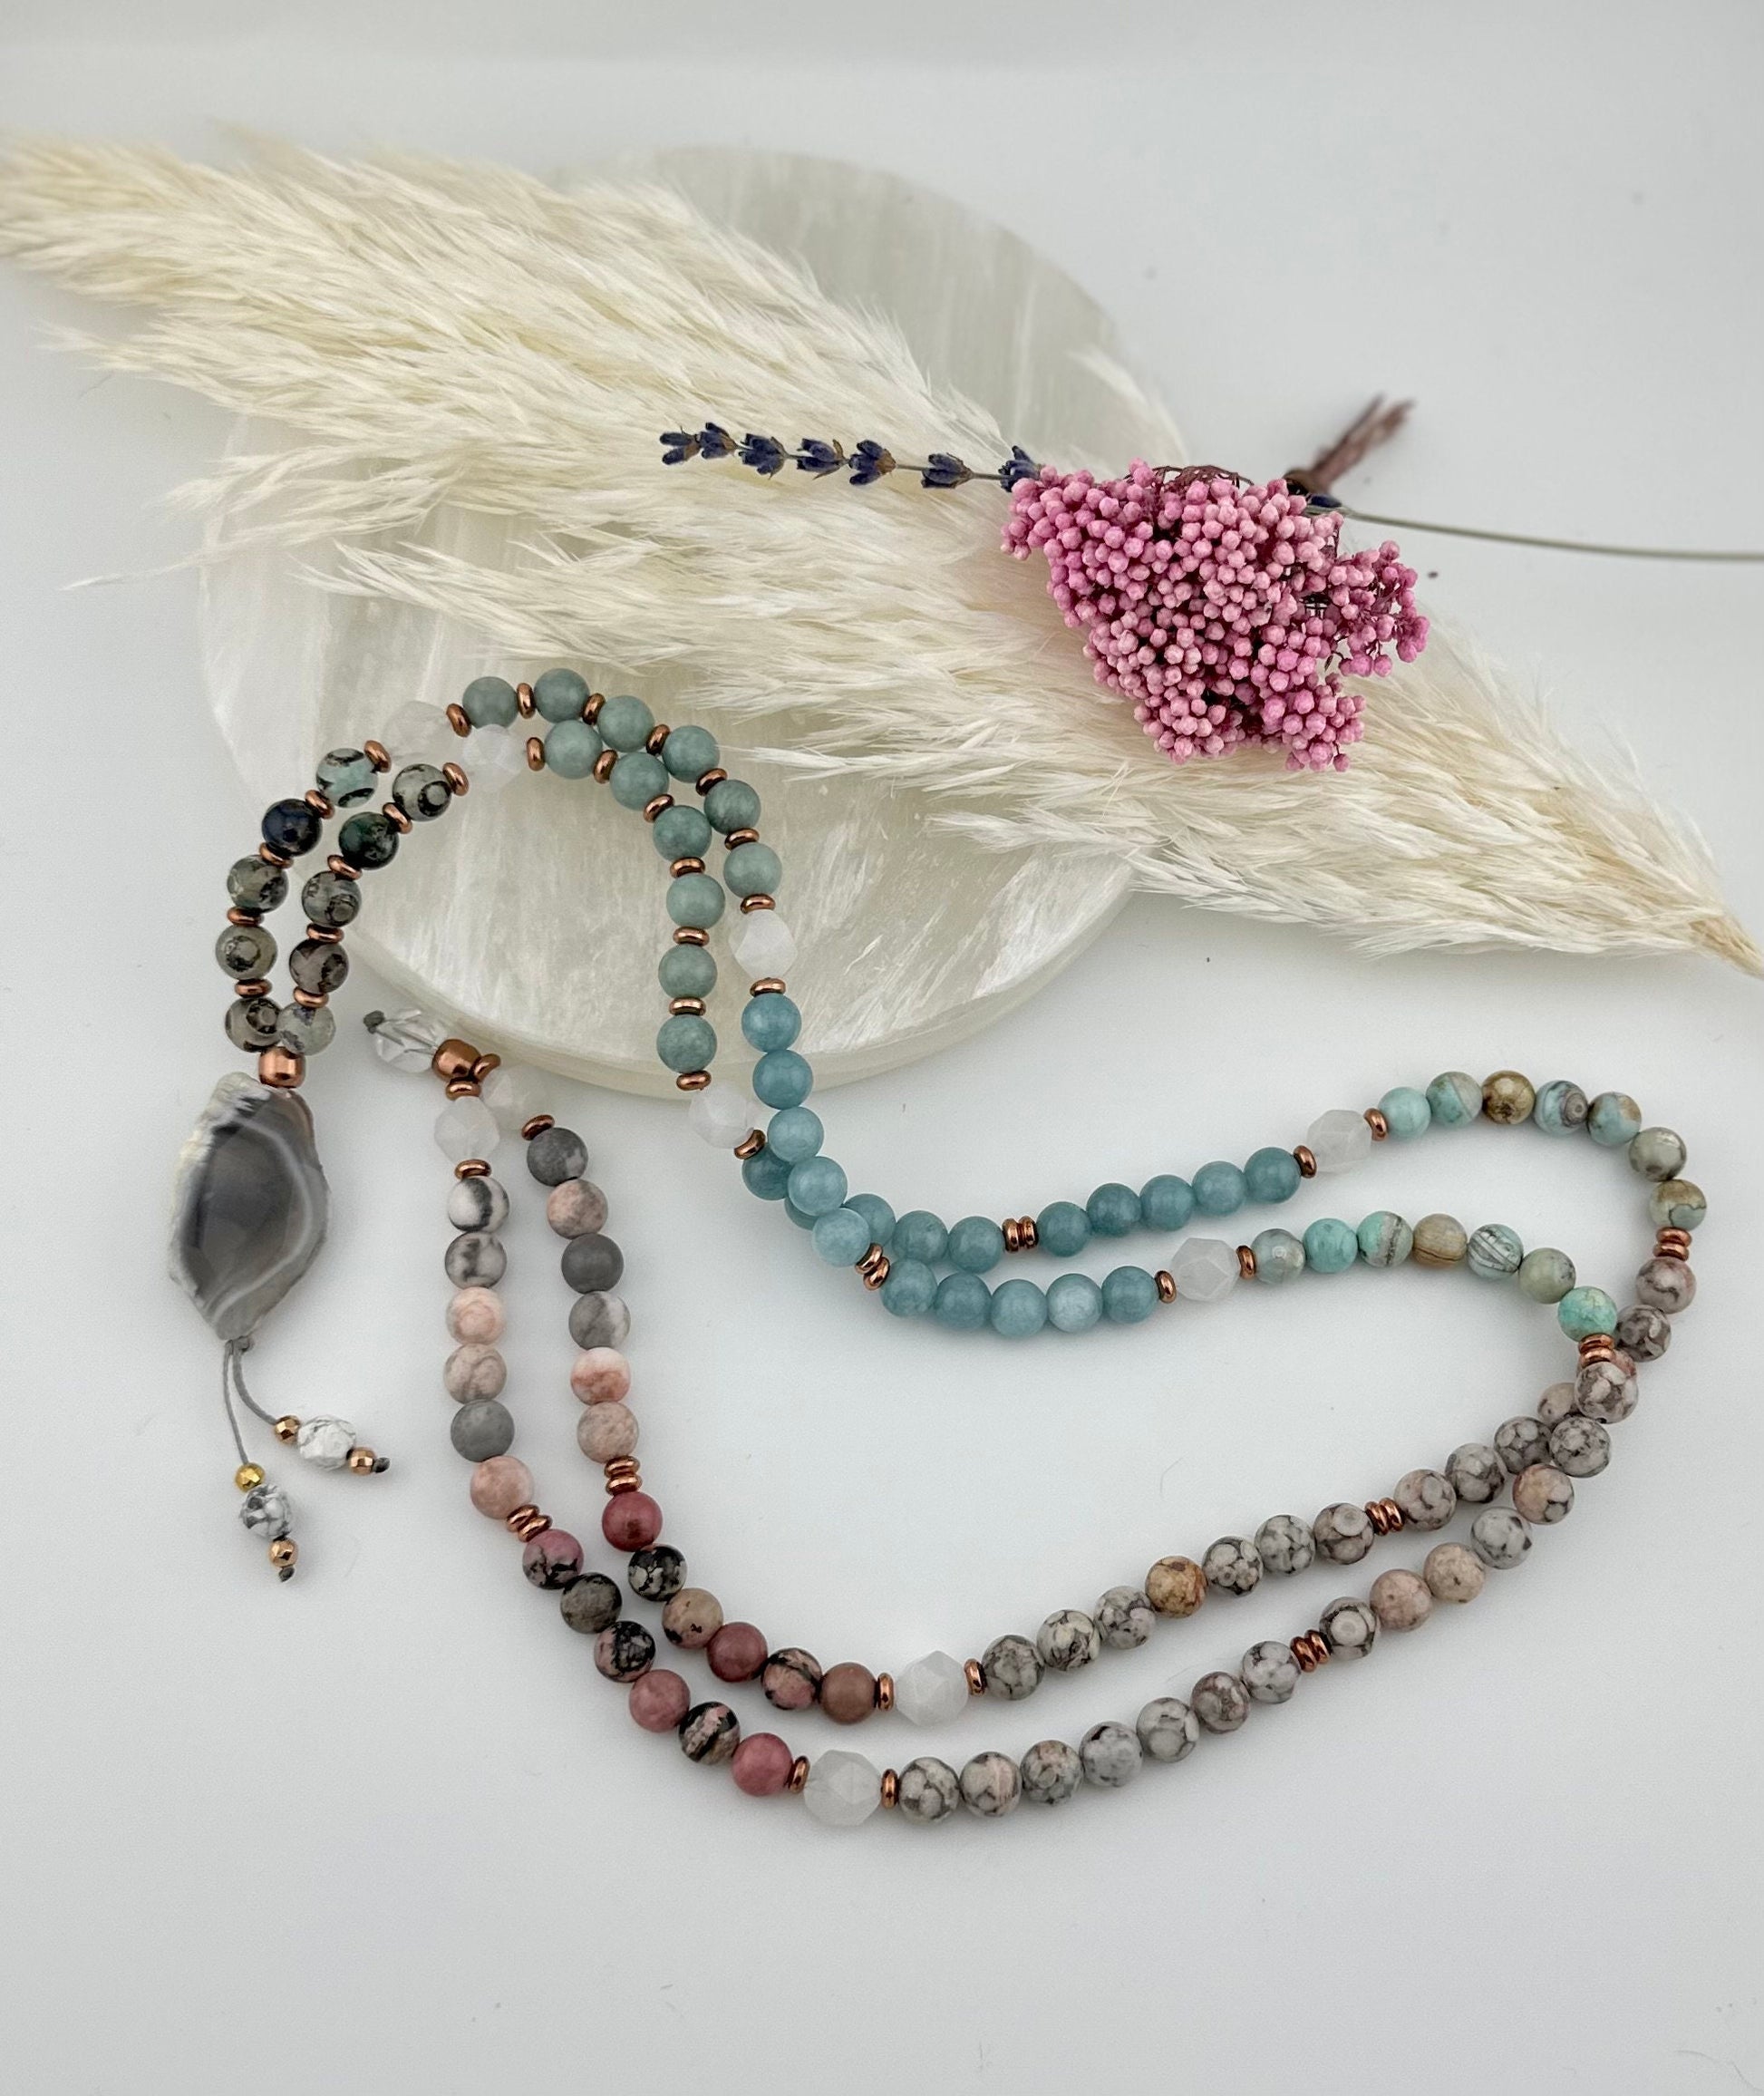 Gemstone mala rare natural healing stone necklace wrapped bracelet jewelry gift for her meditation yoga practice 108 bead mala prayer bangle